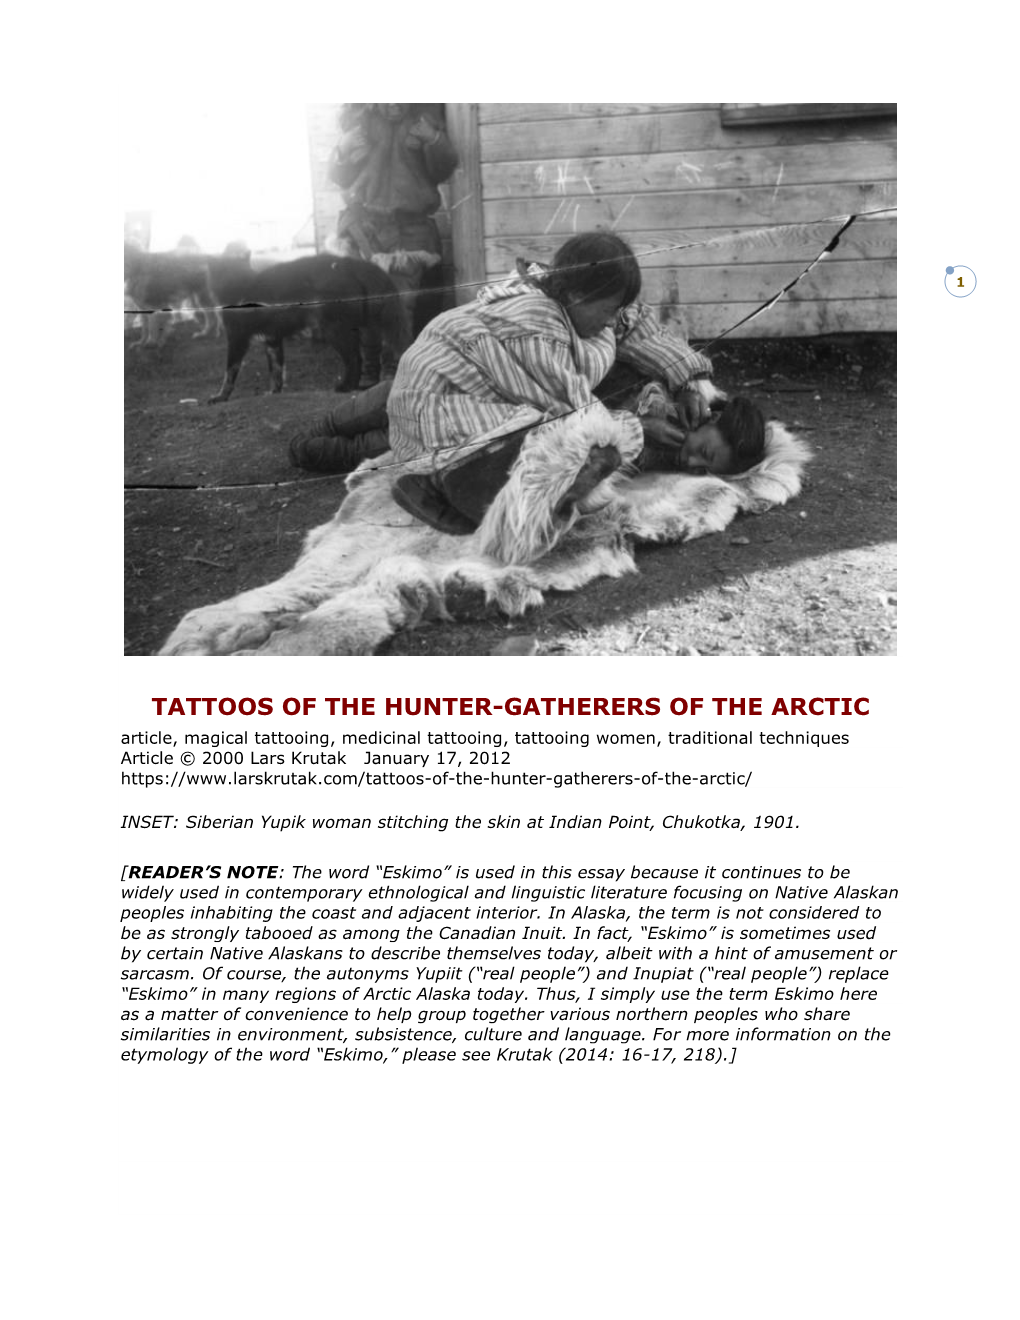 Tattoos of the Hunter-Gatherers of the Arctic (Lars Krutak, 2000)